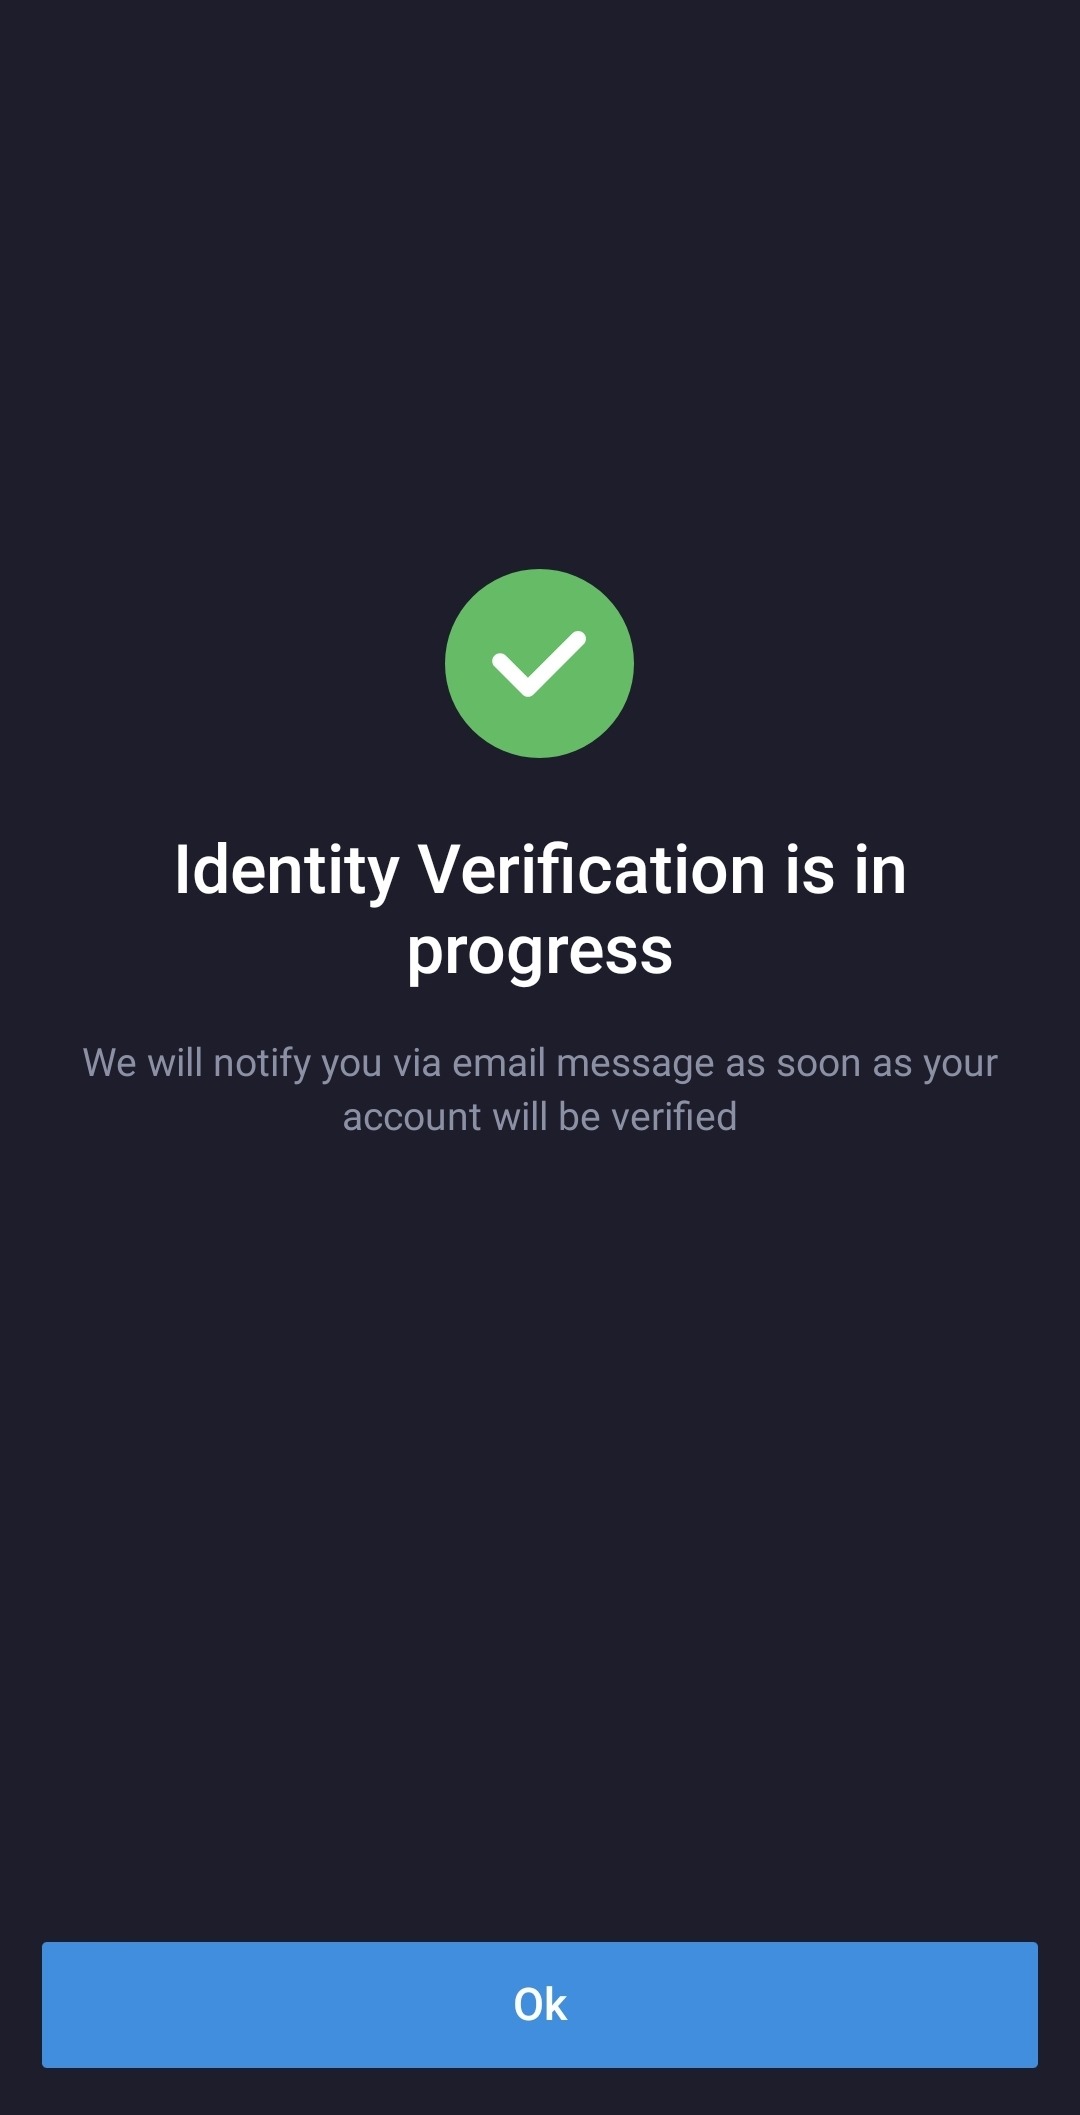 Identity verification in process